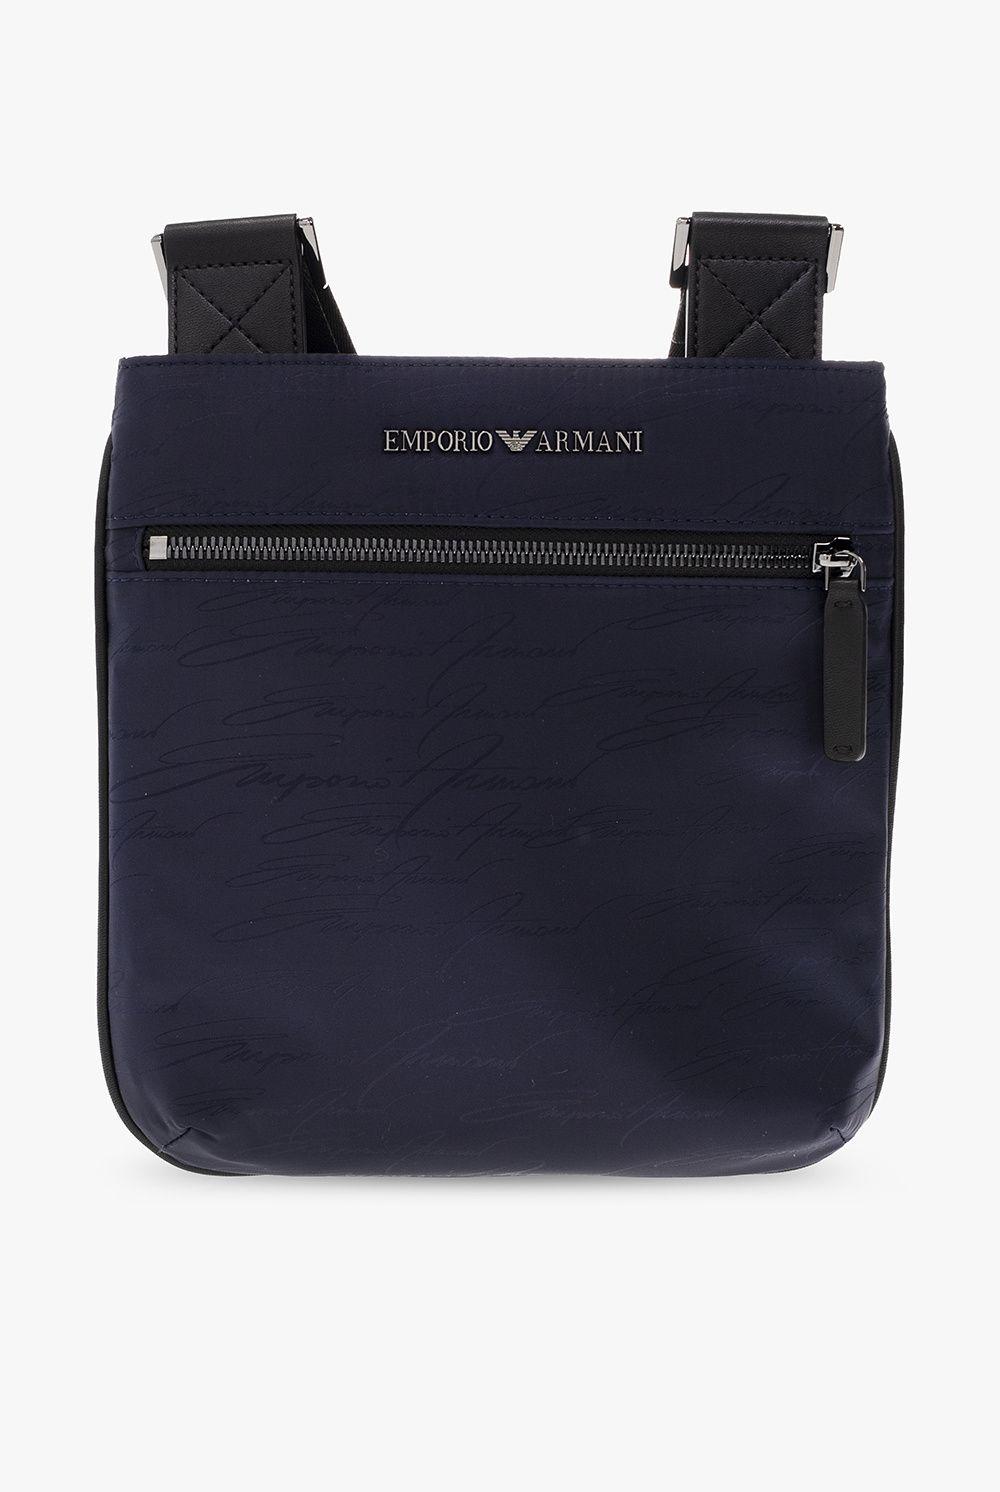 Emporio Armani Shoulder Bag With Logo in Blue for Men | Lyst